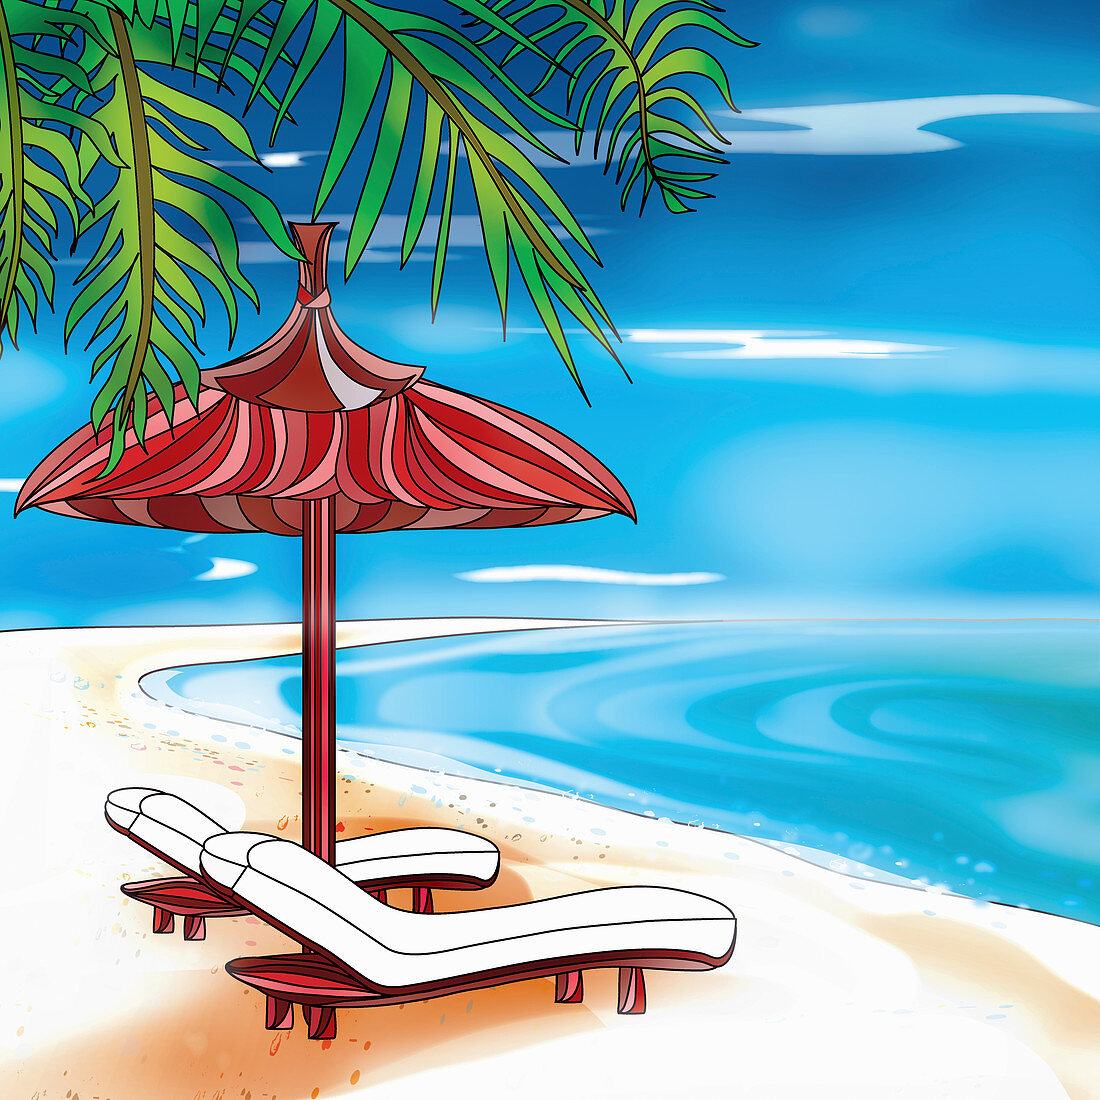 Empty sun loungers on deserted beach, illustration